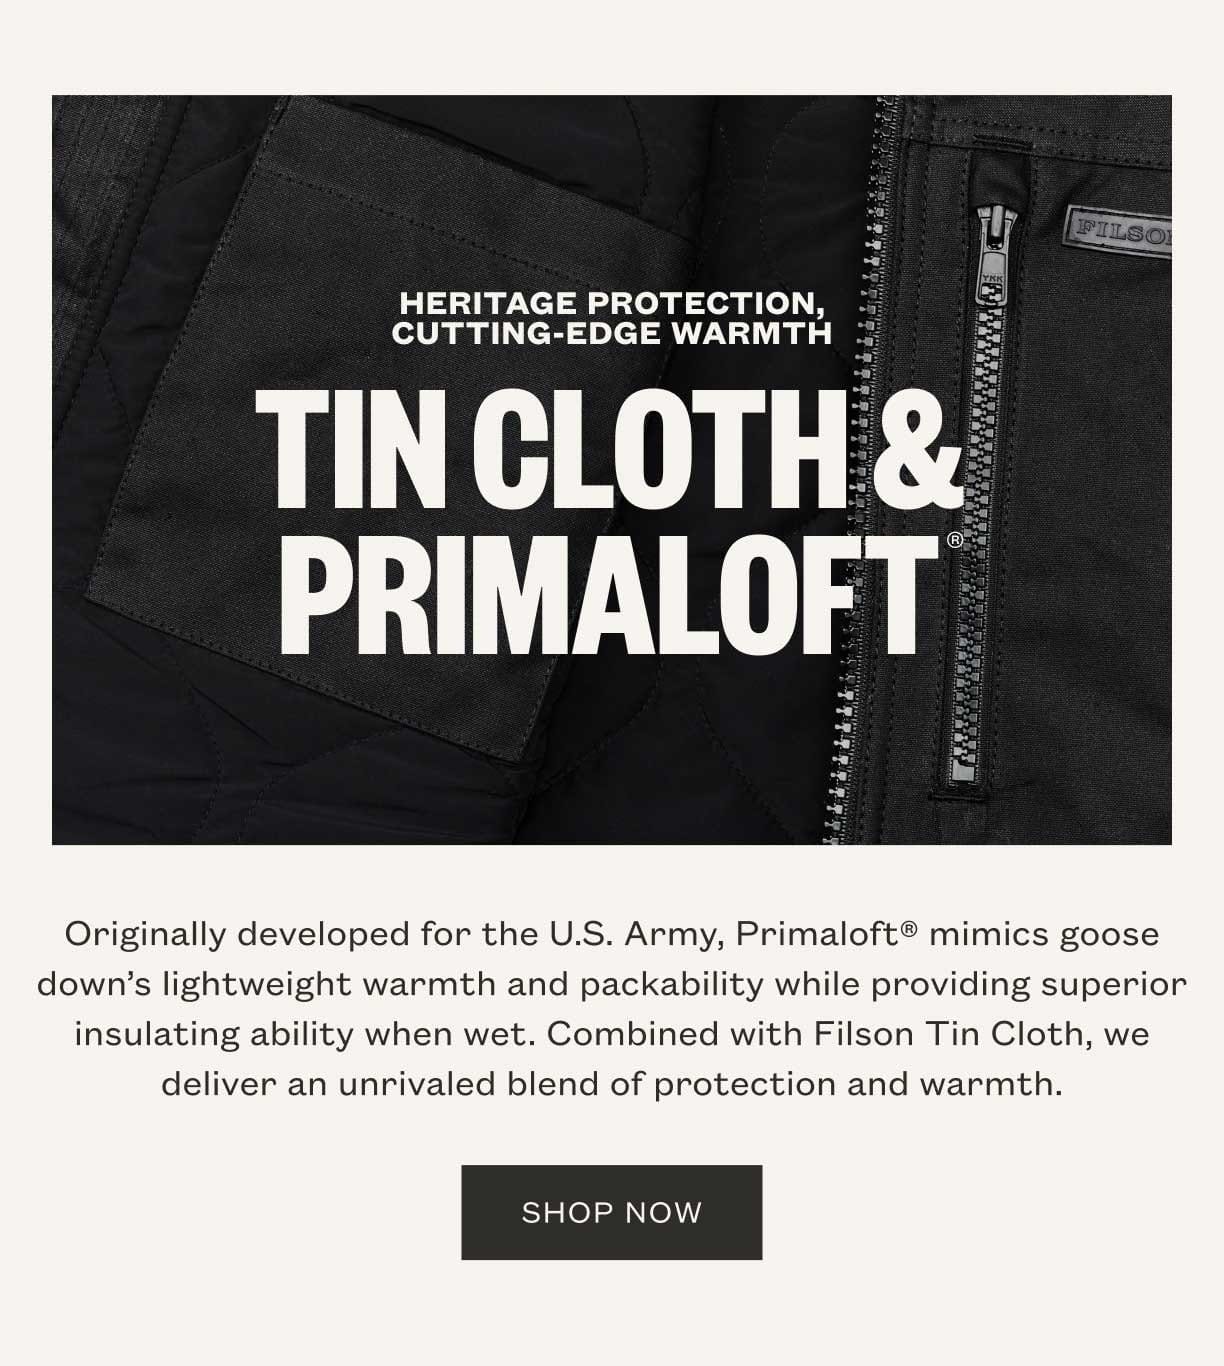 Tin Cloth & Primaloft